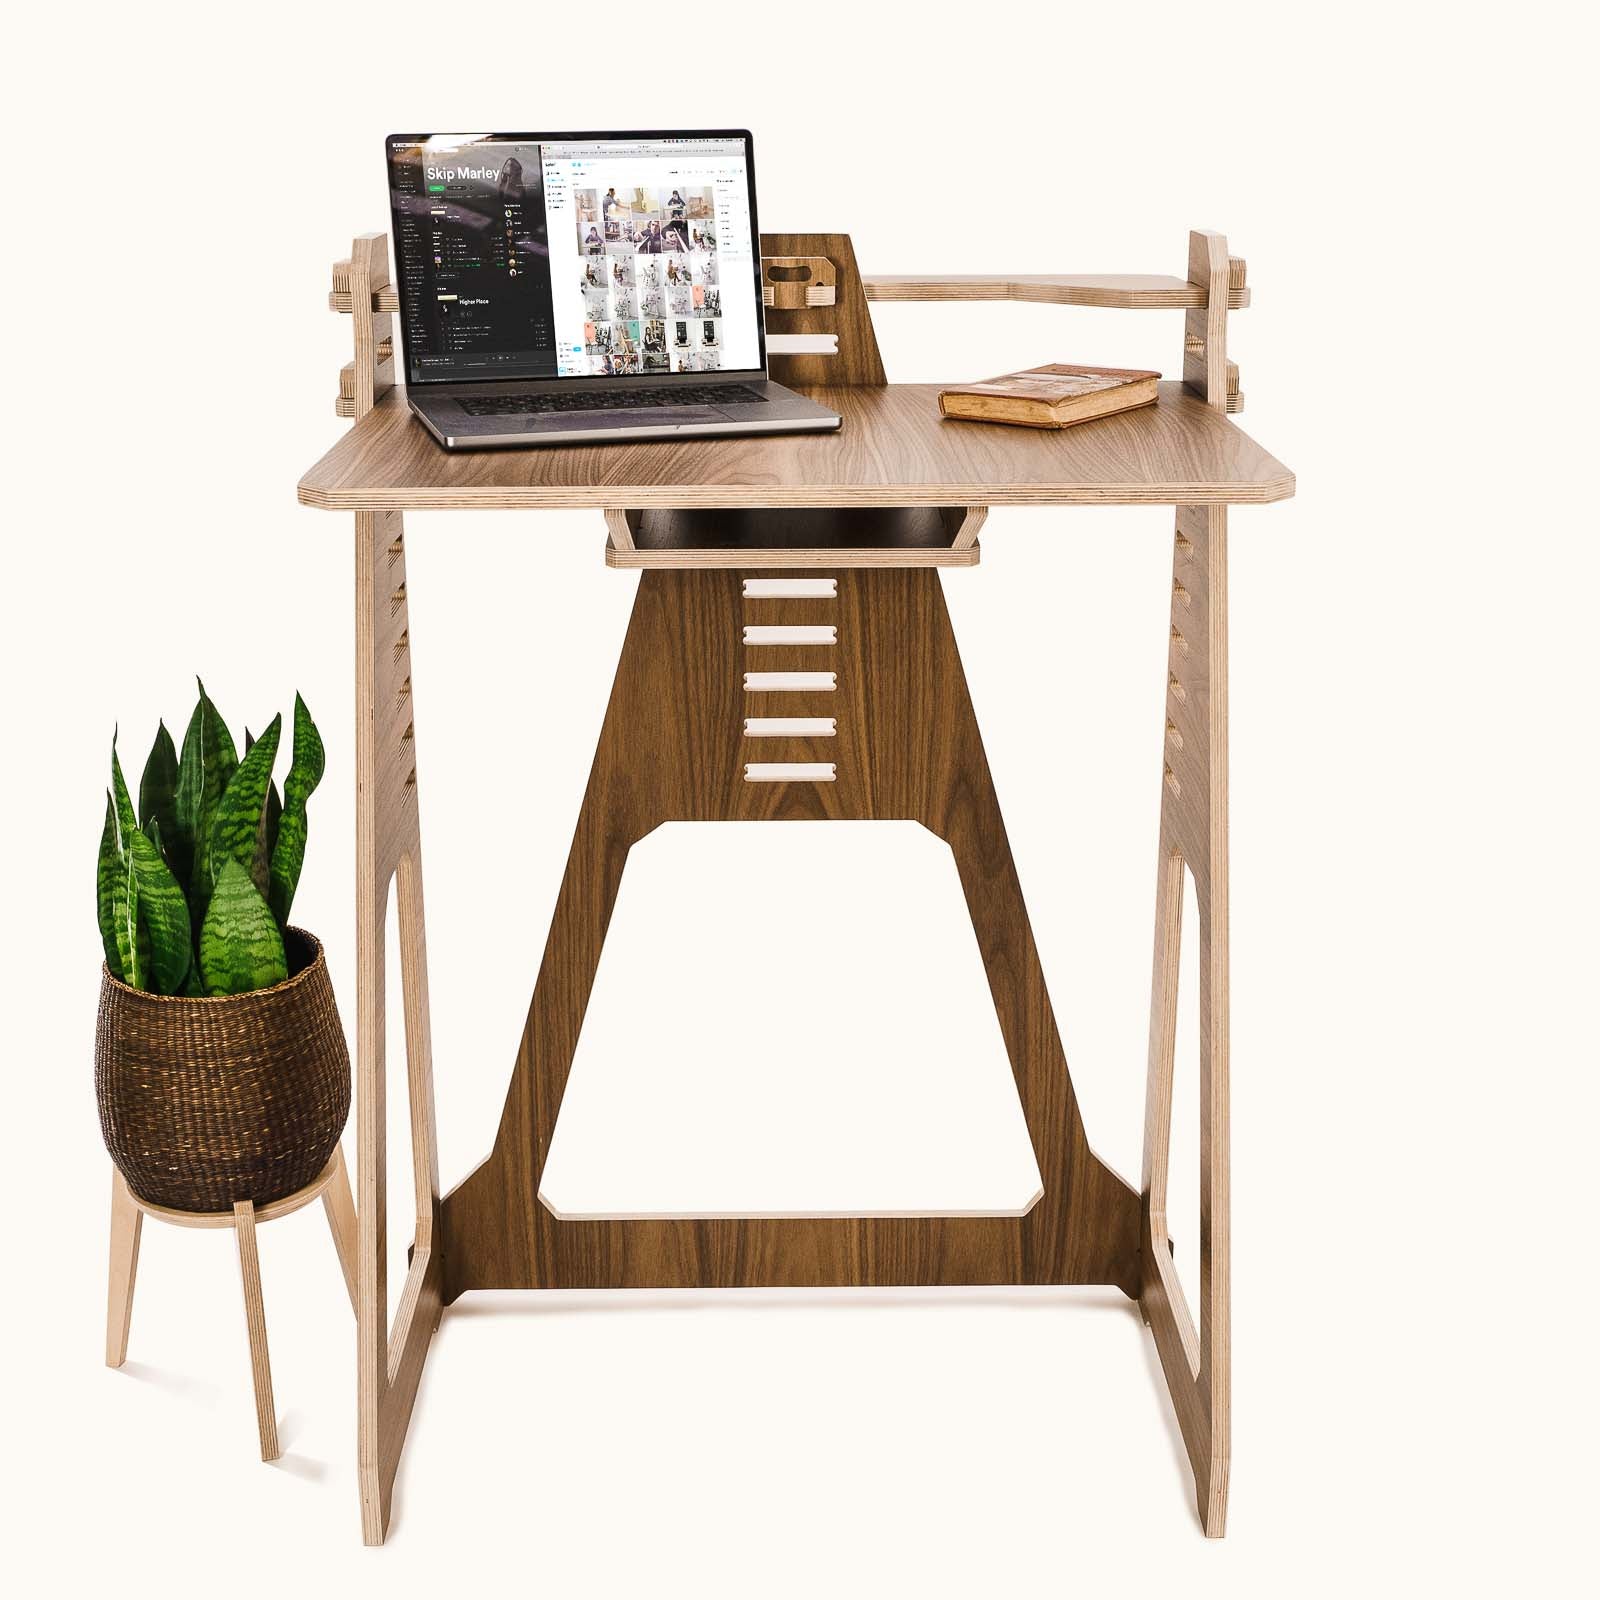 Leather Desk Set - Leather Organizer Desk Set - Walnut Wood Desk Set -  Office Product - Desk Accessories Set - 11 PCS (Gray)